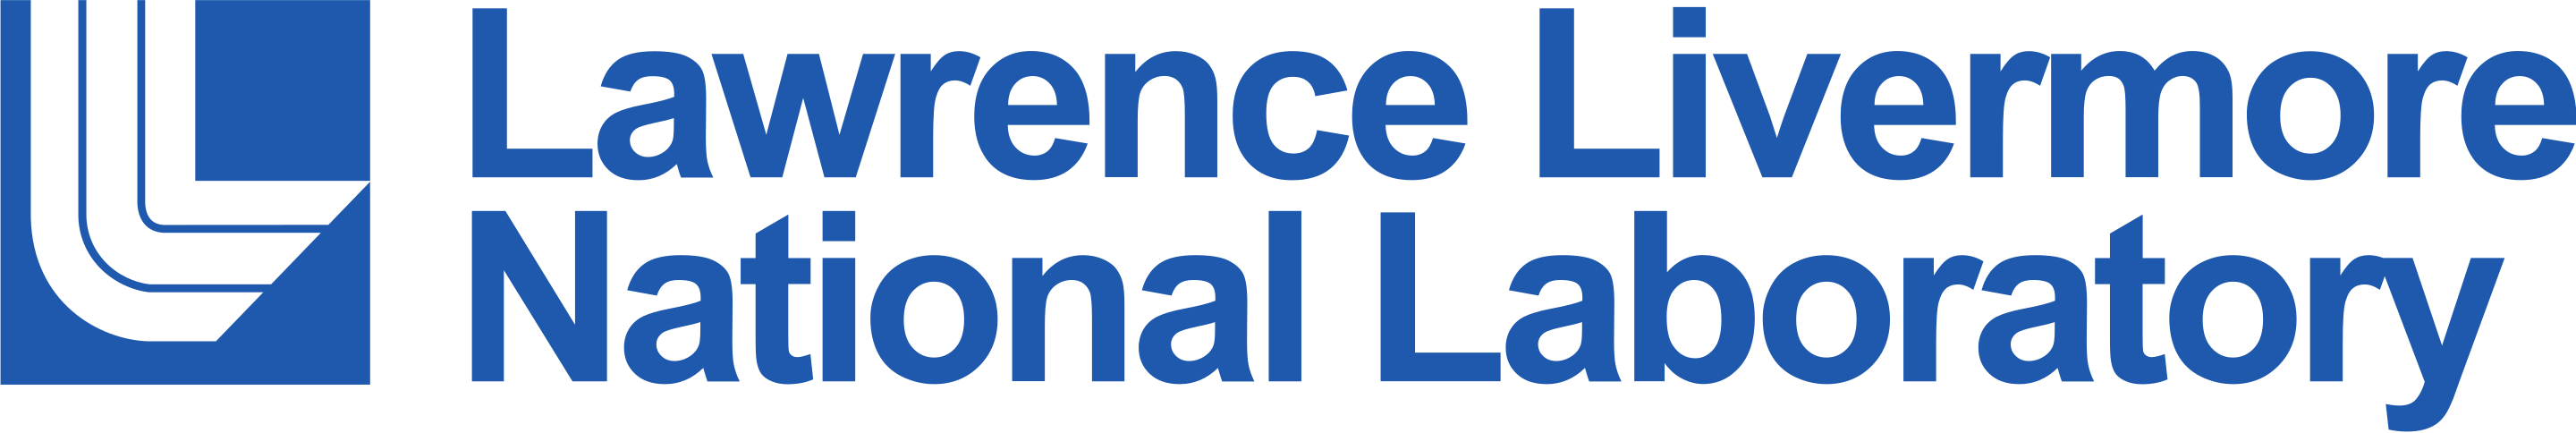 LLNL - Lawrence Livermore National Laboratory - Ливерморская национальная лаборатория им. Э. Лоуренса